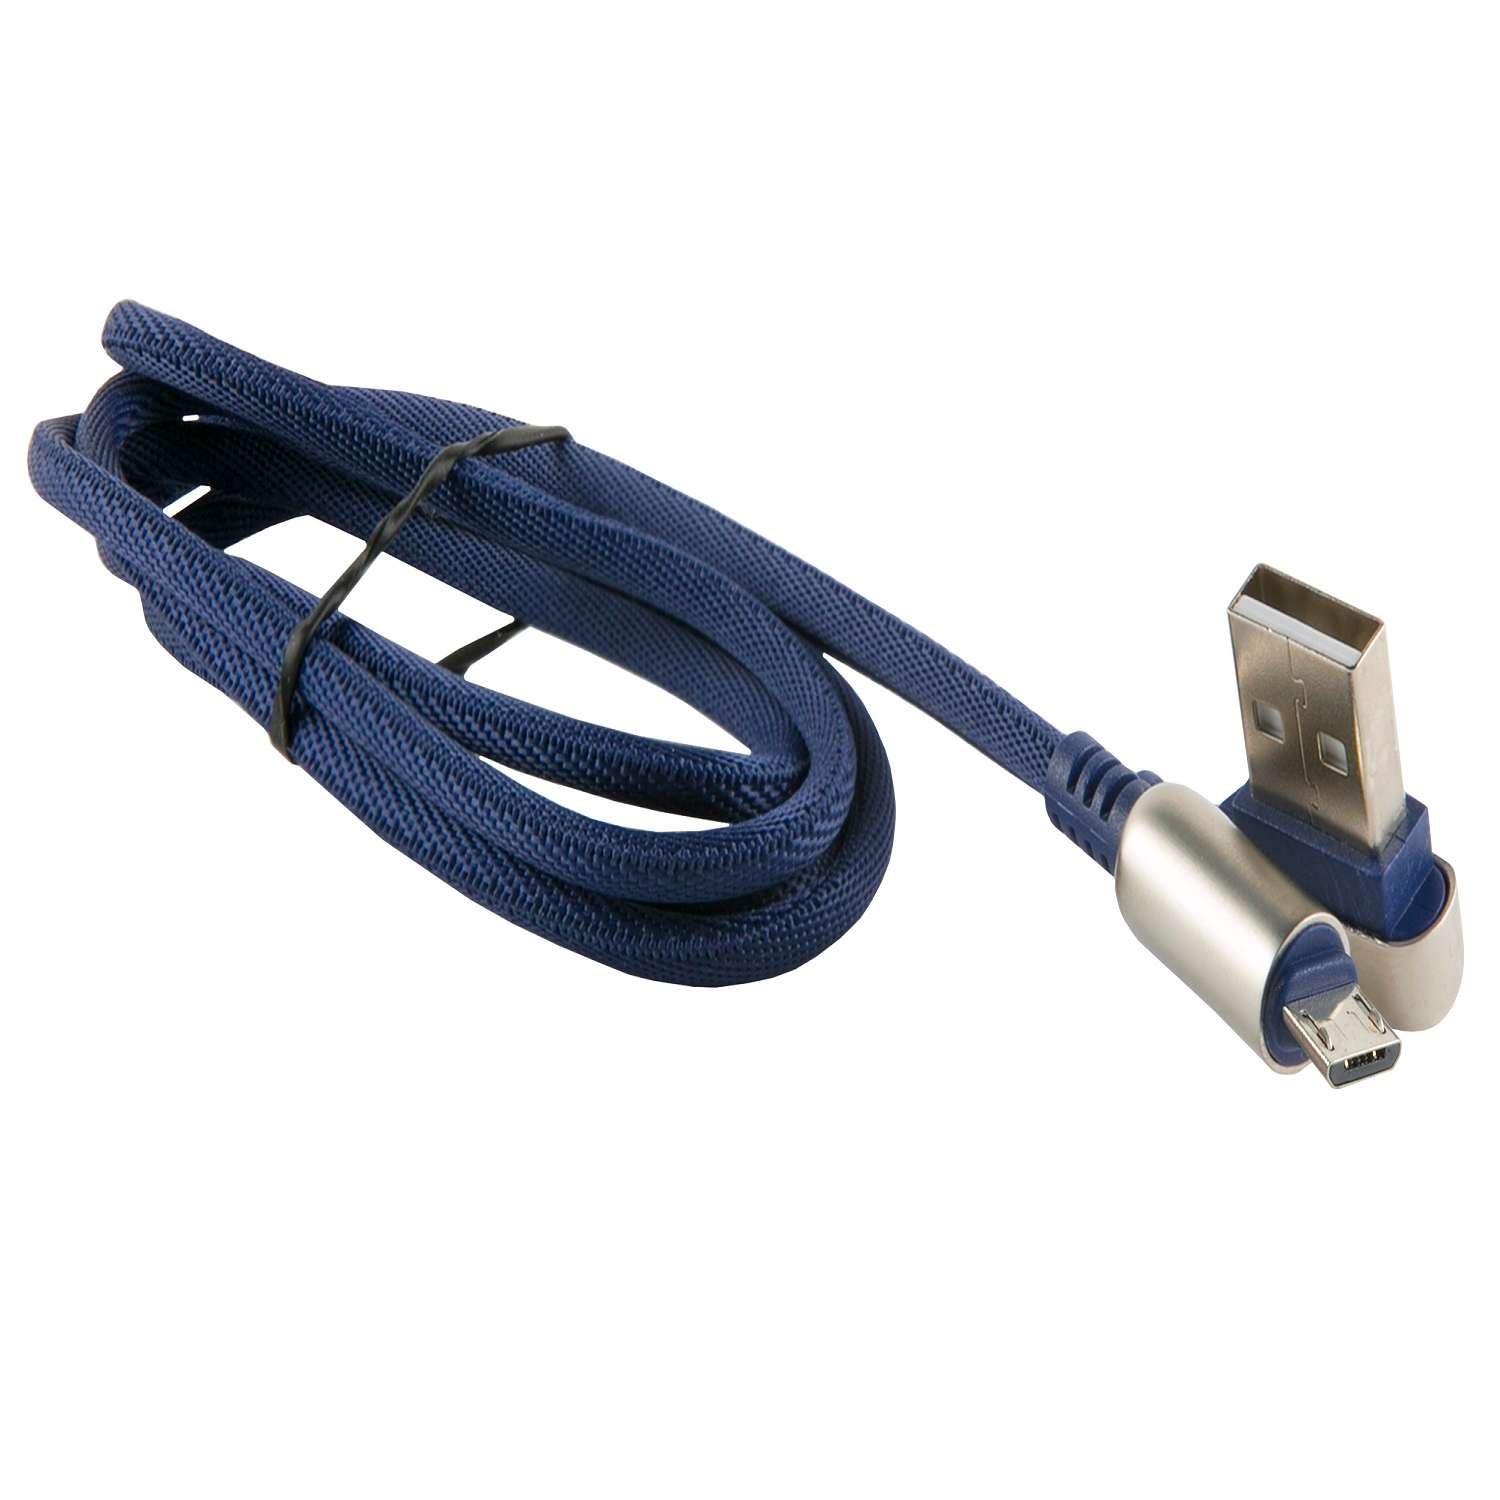 Red line кабель fishnet синий. Кабель Red line Smart High Speed USB to MICROUSB синий. Молния голубая РБГ. Кабель red line